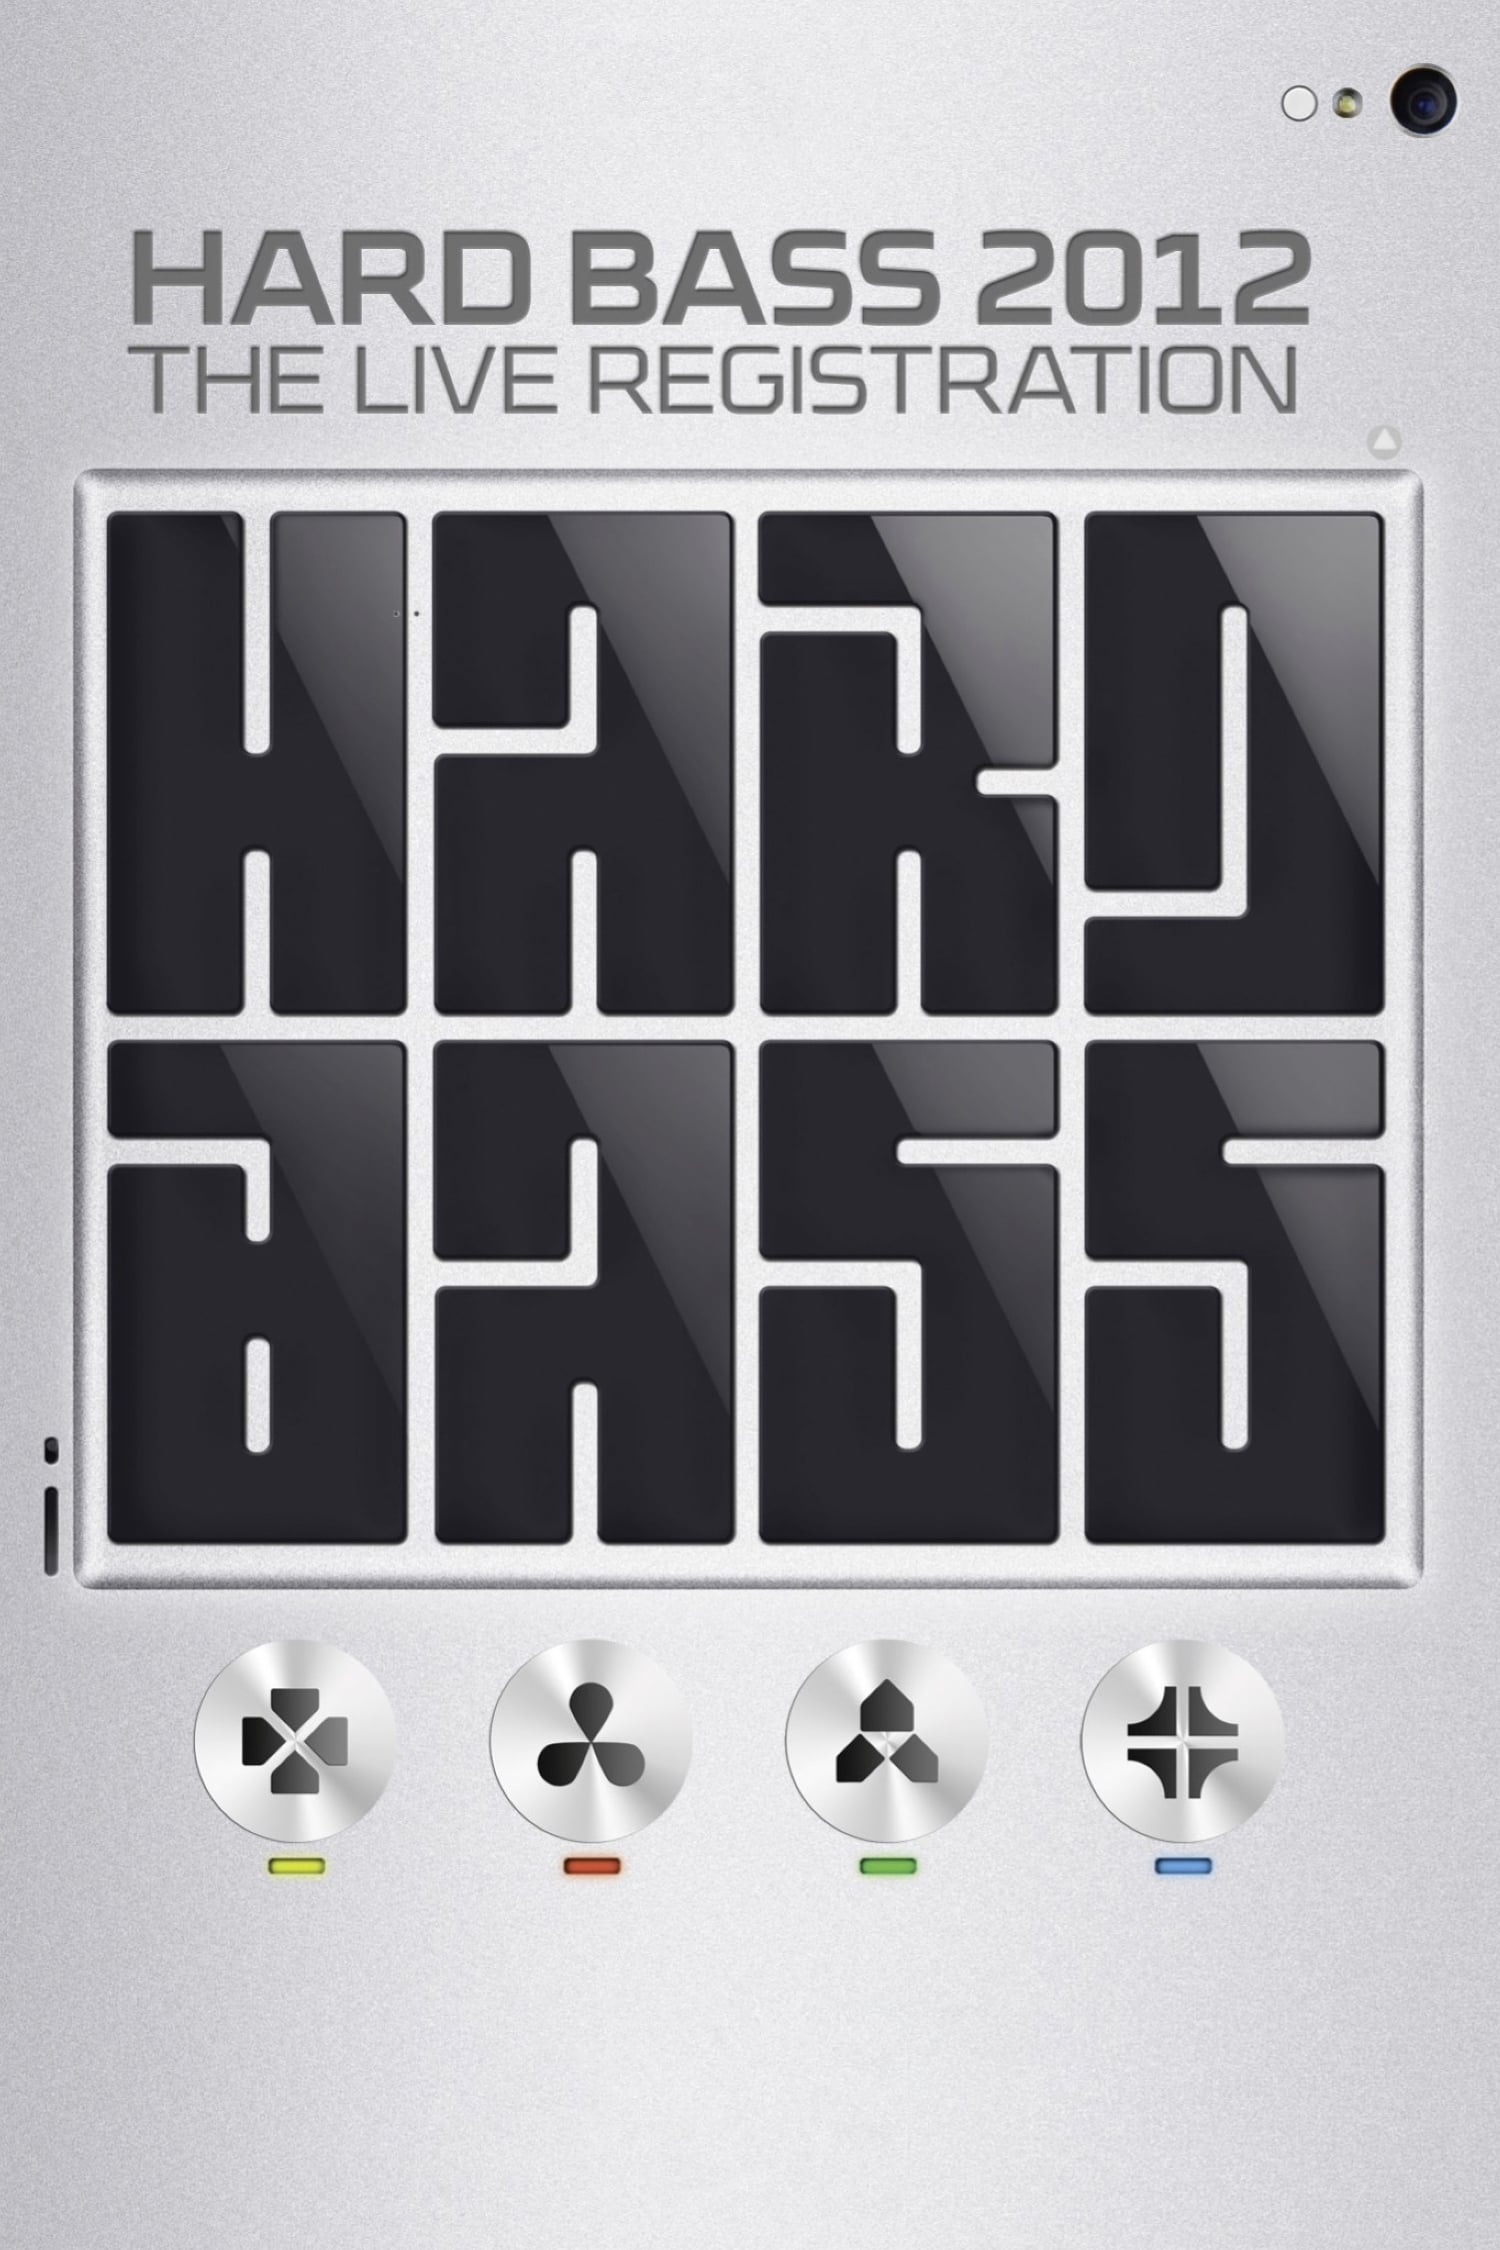 Hard Bass 2012 - The Live Registration